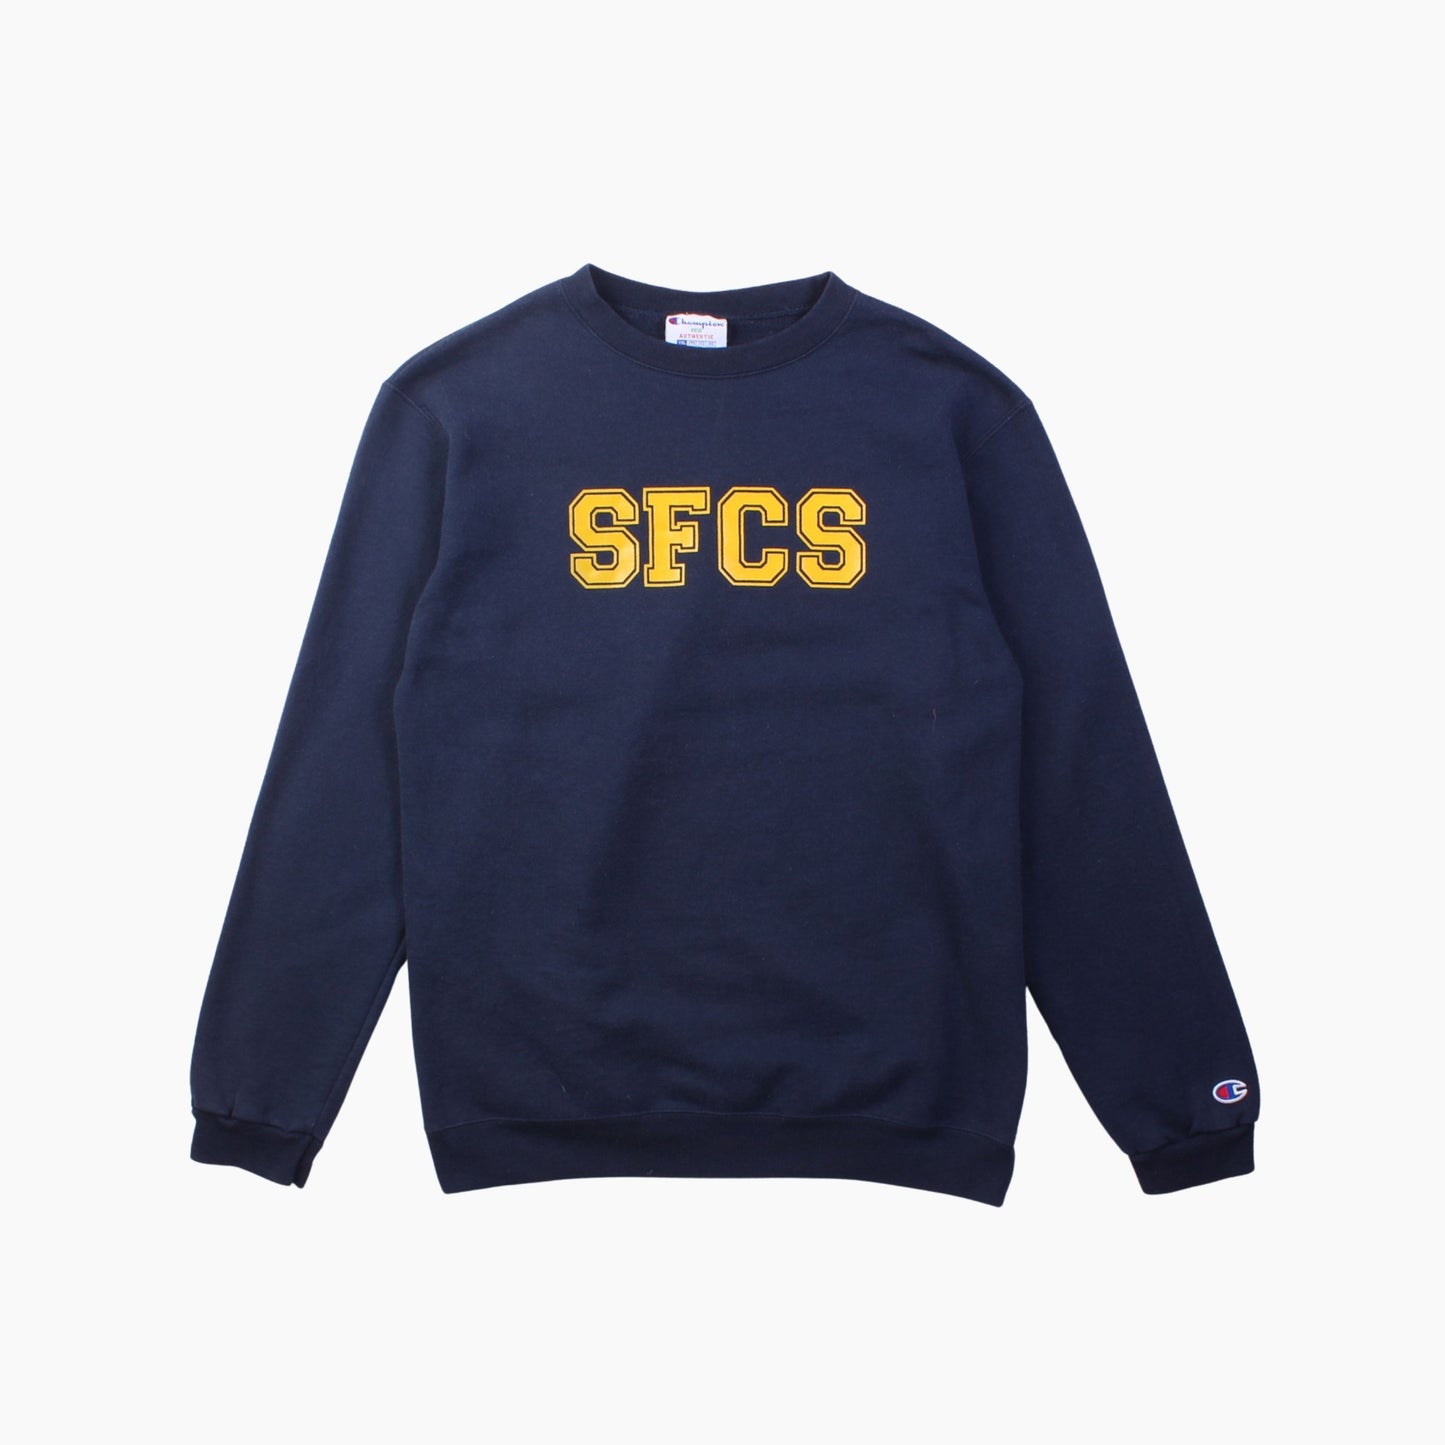 Vintage 'SFCS' Champion Sweatshirt - American Madness